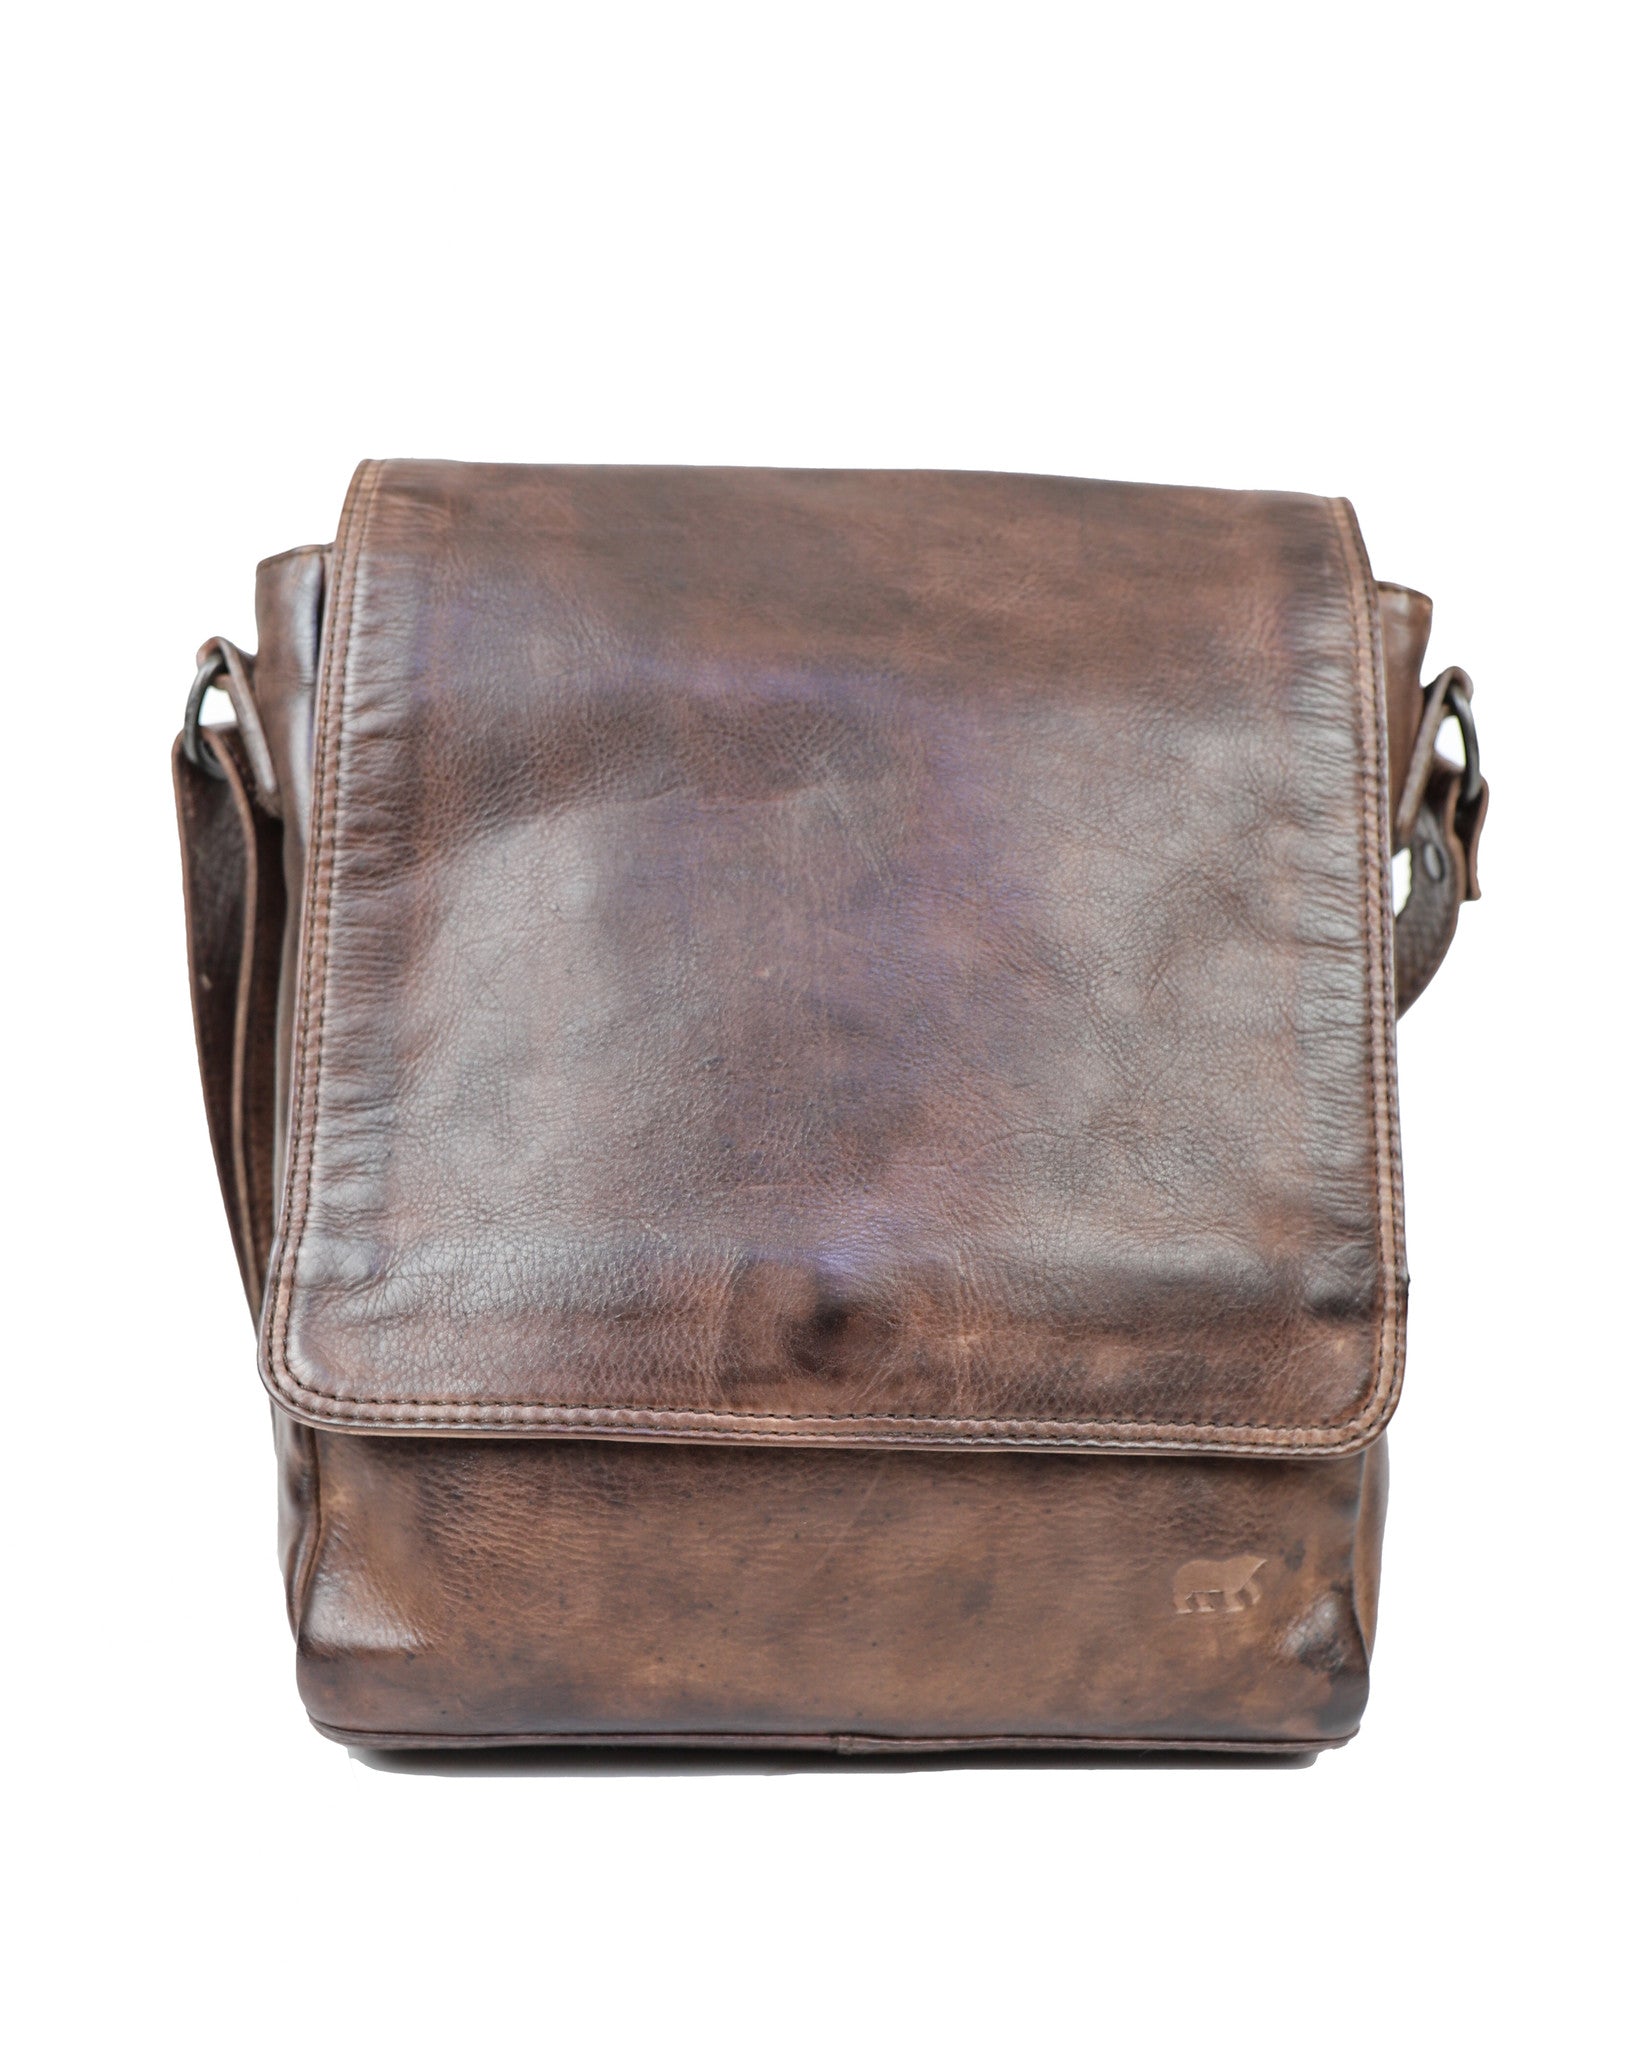 Shoulder bag 'Dirk' dark brown - CL 40025